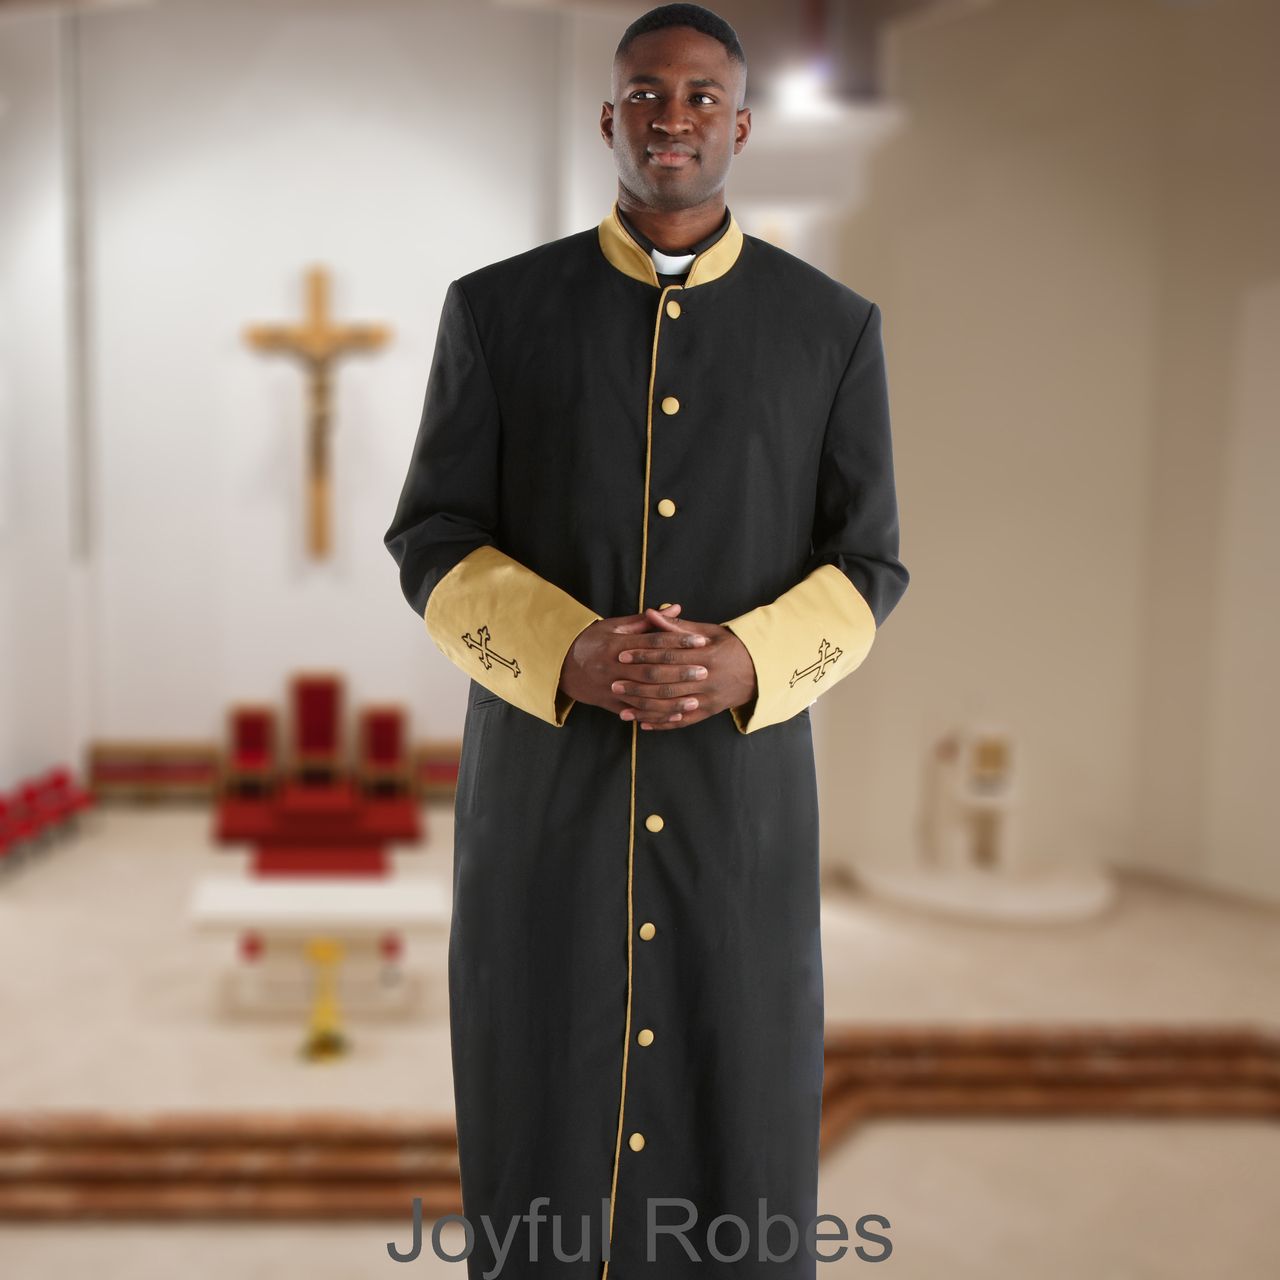 301 M. Men's Clergy/Pastor Robe Black/Gold Cuff